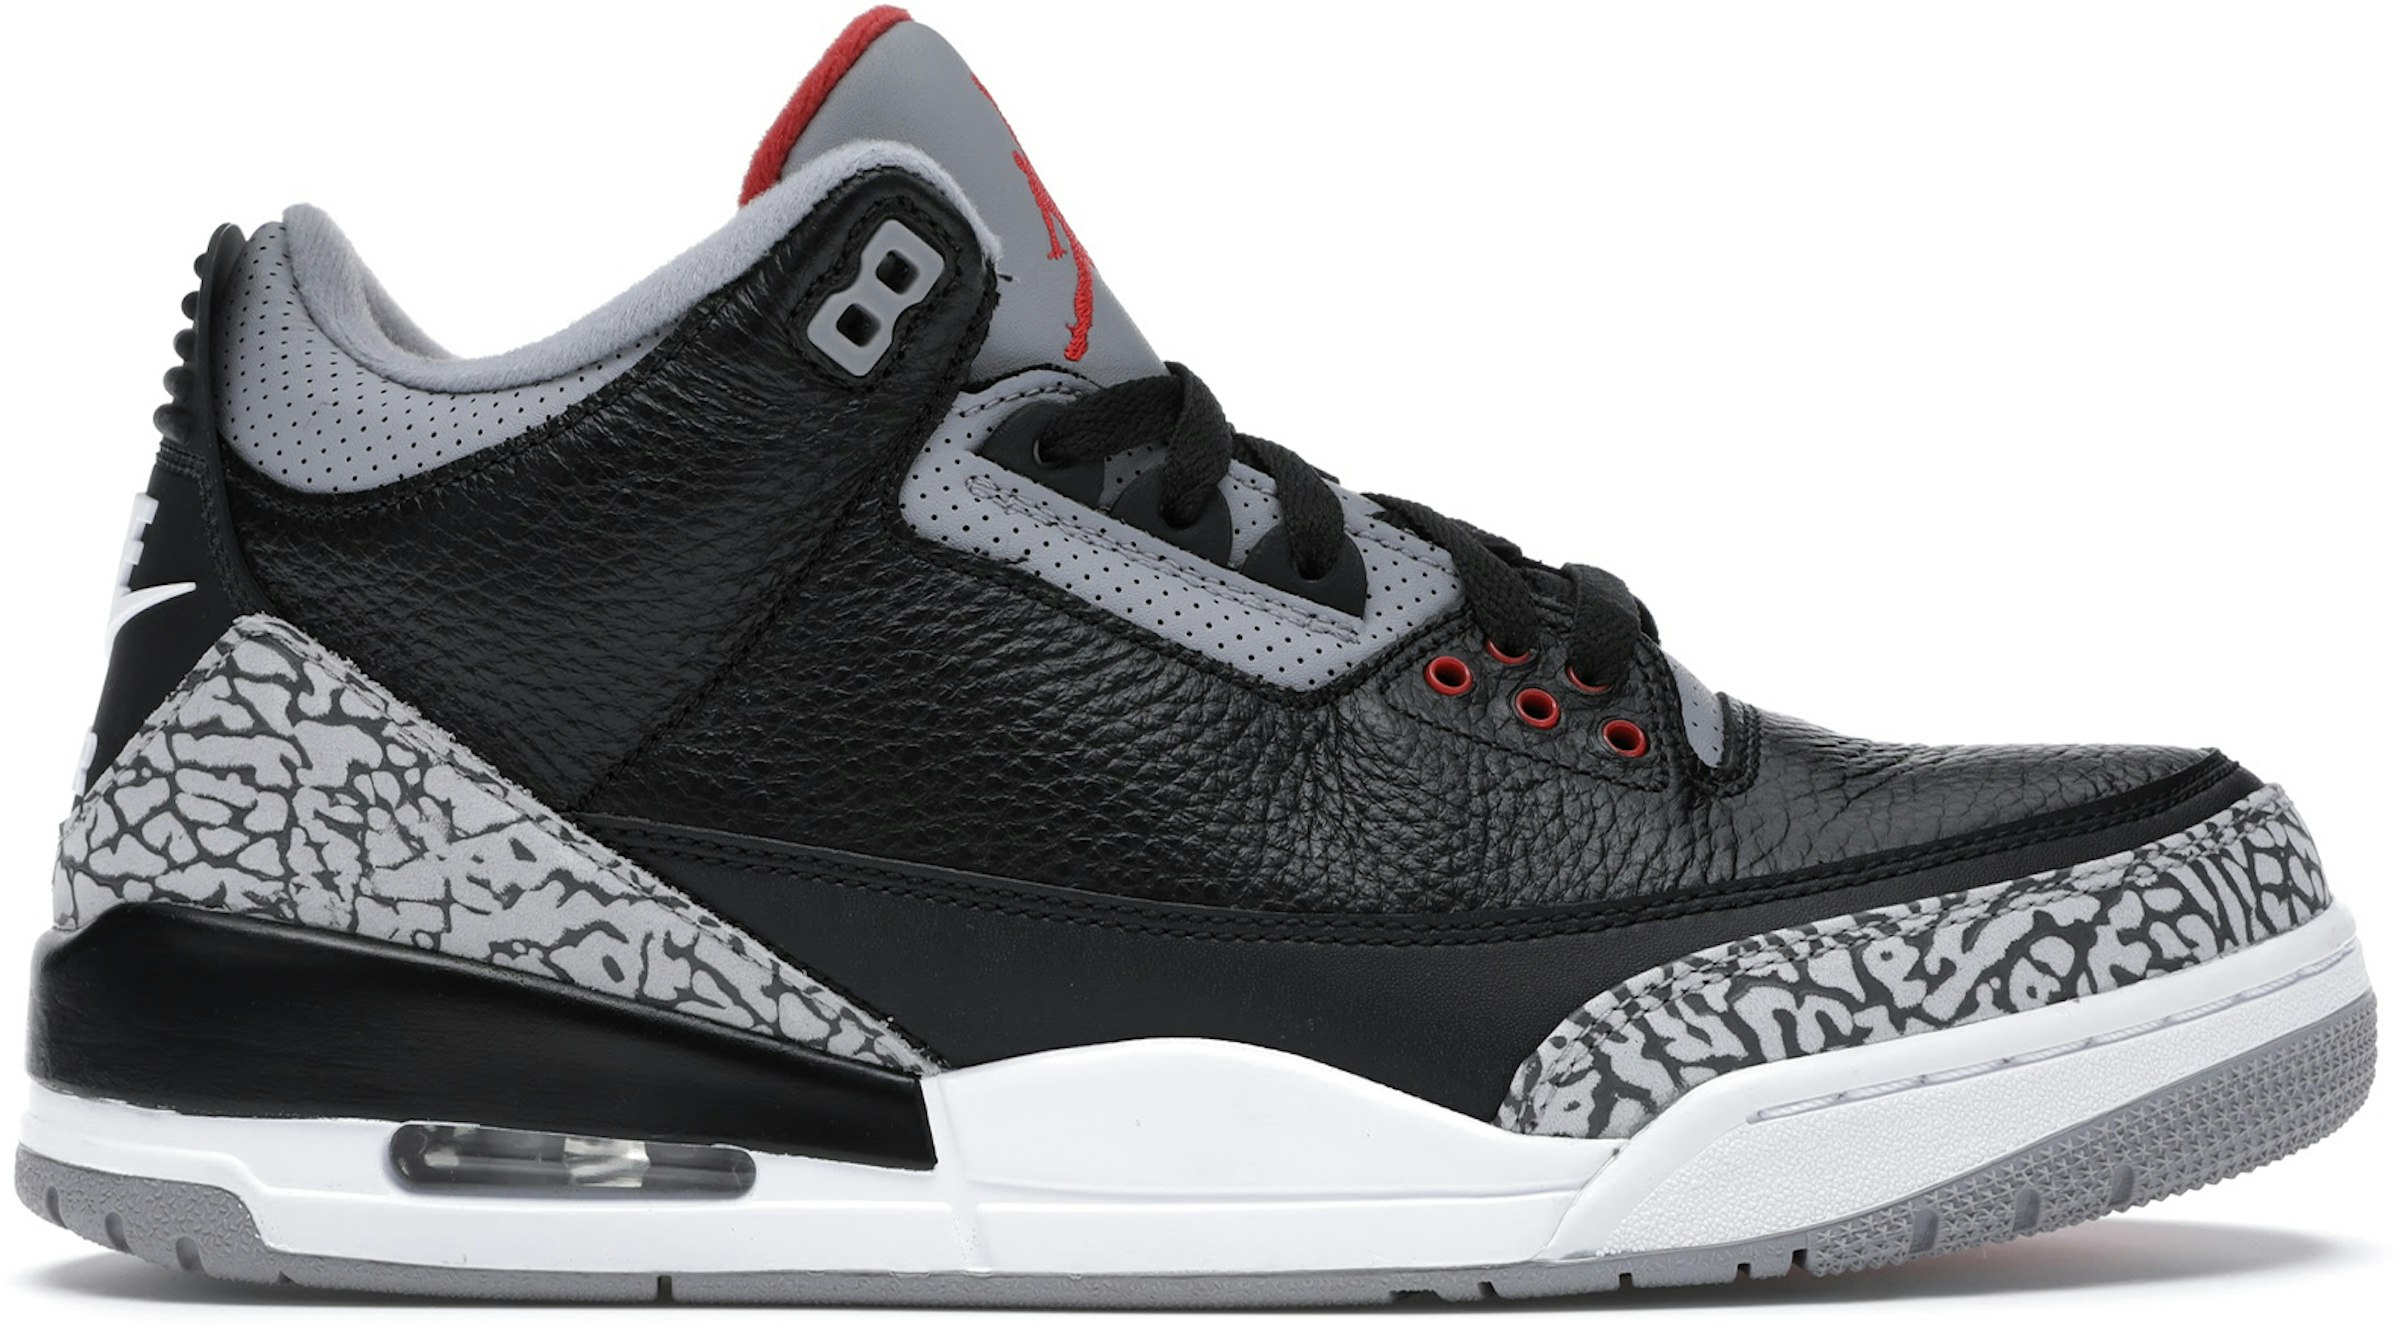 Compra zapatos Jordan 3 StockX